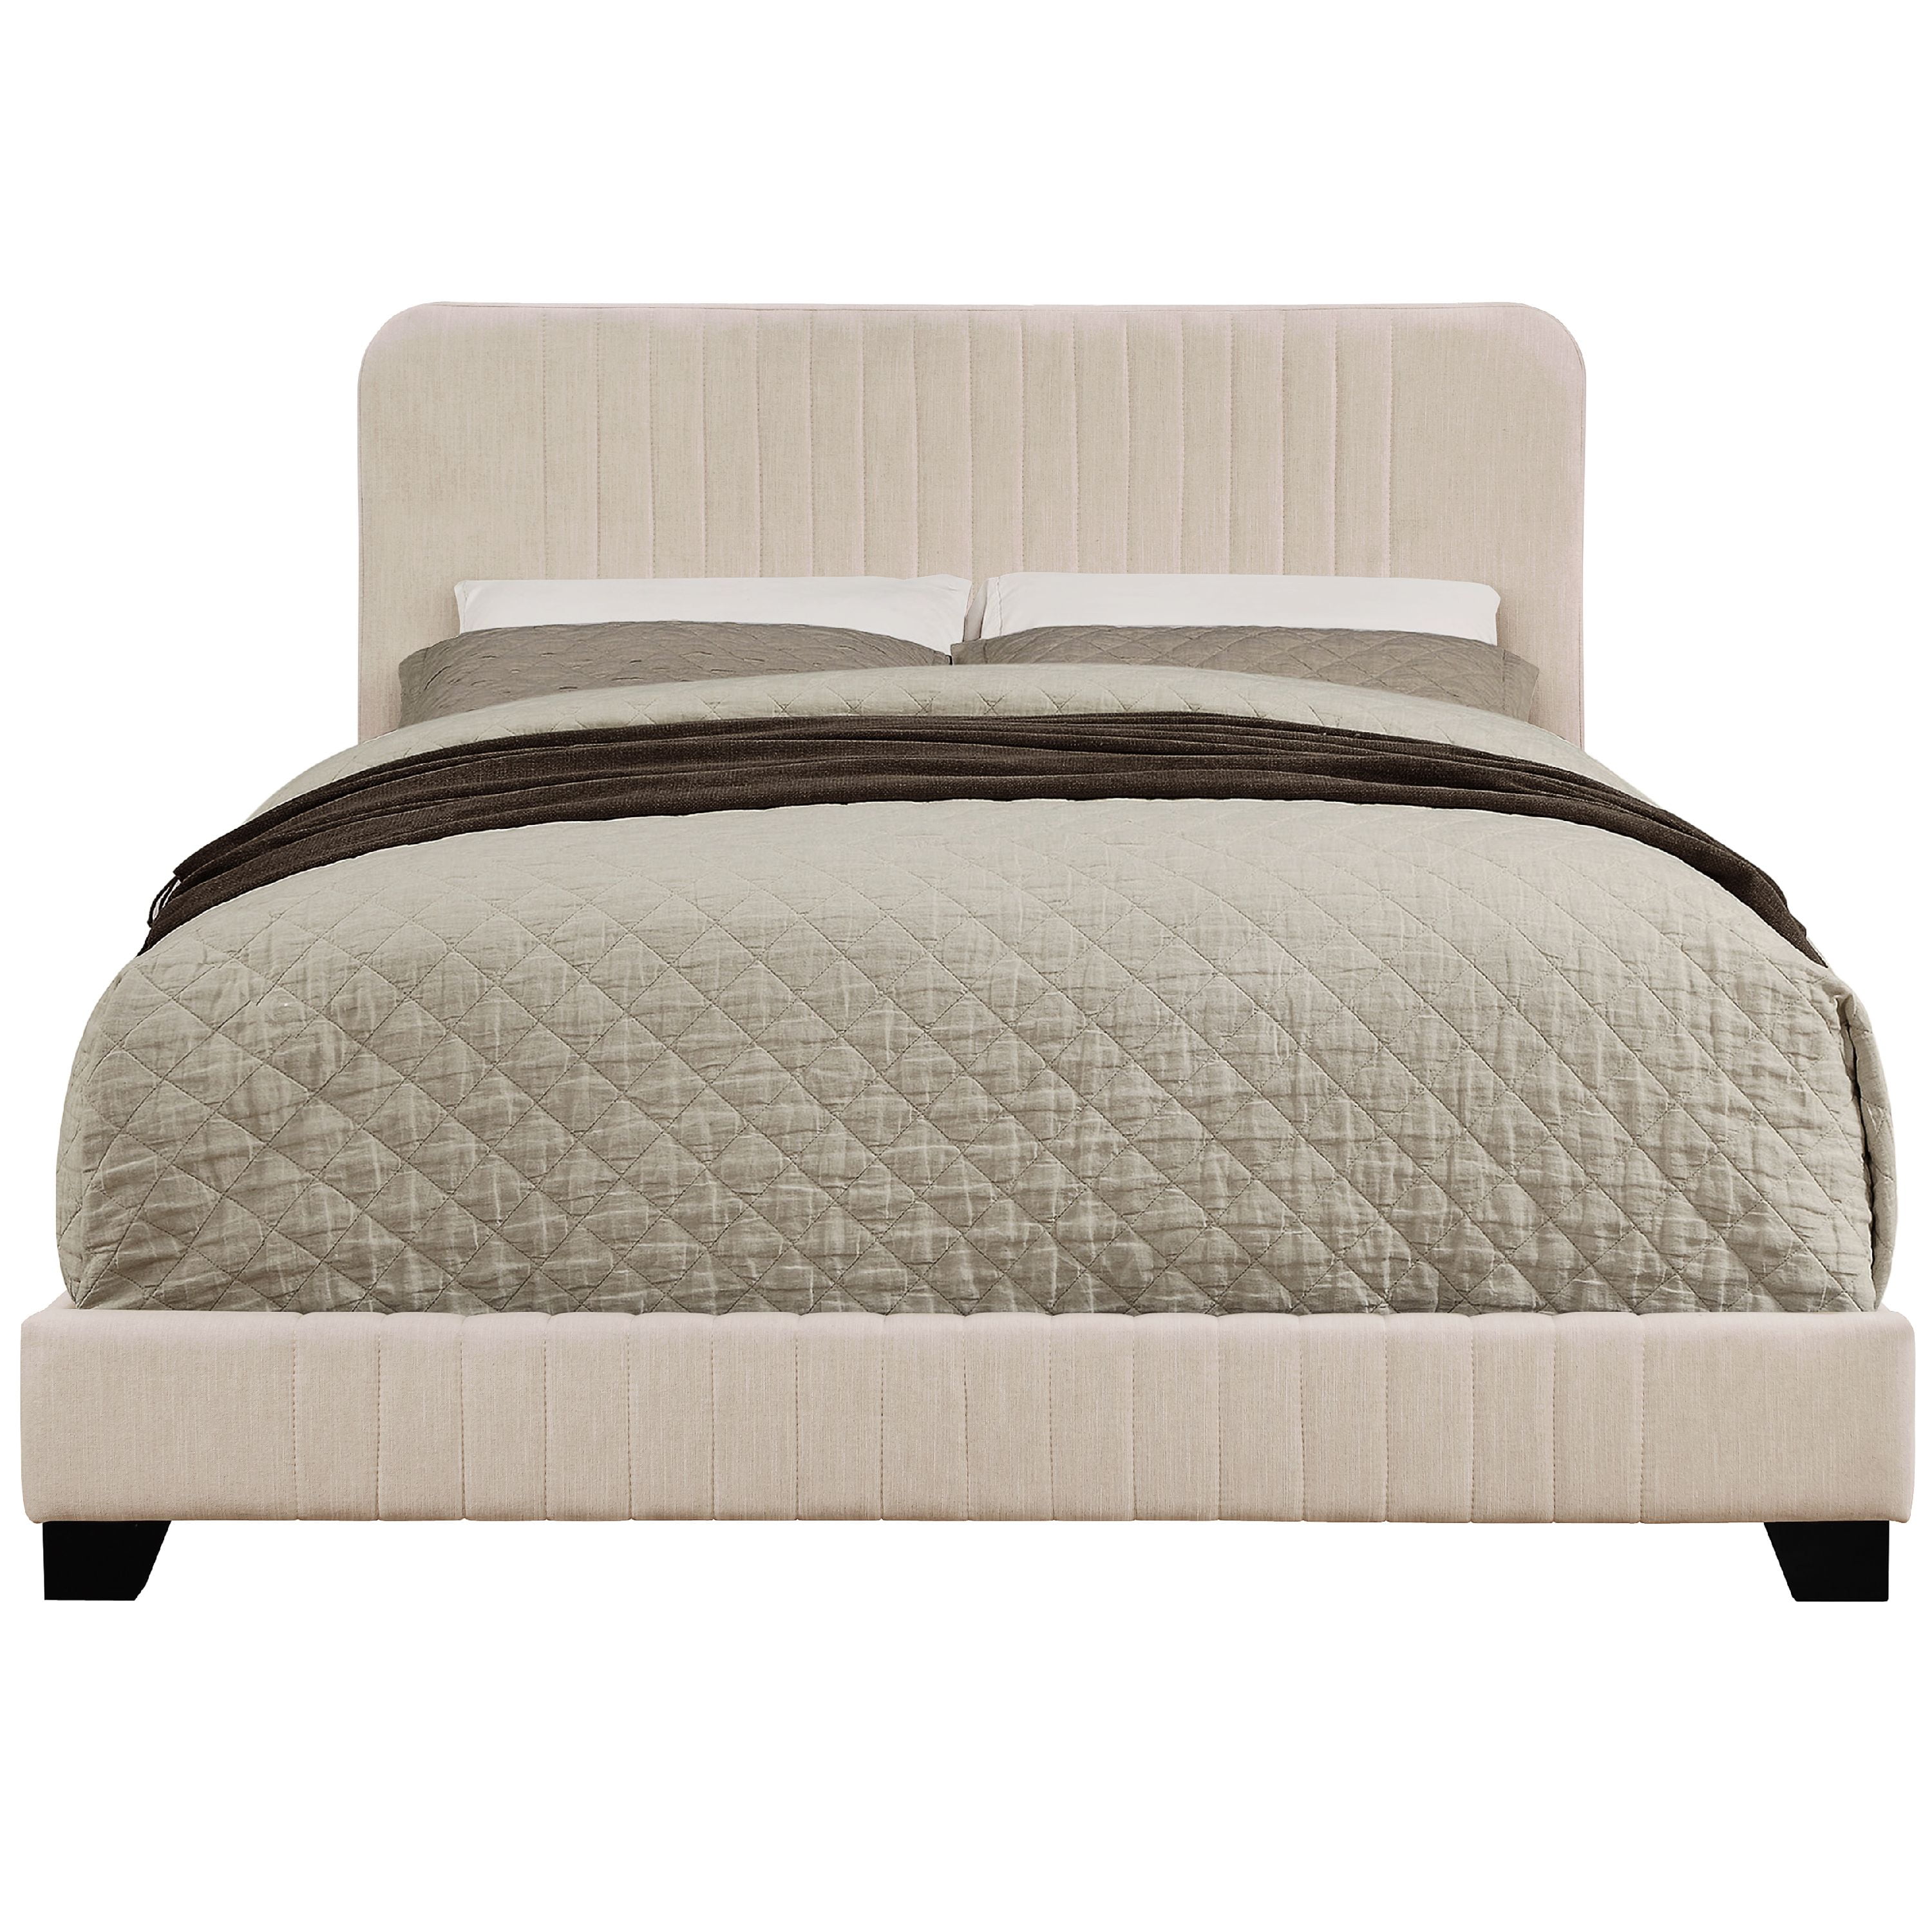 Full Size Mid Century Modern Upholstered Bed Frame Tufted Panel Headboard Beige 